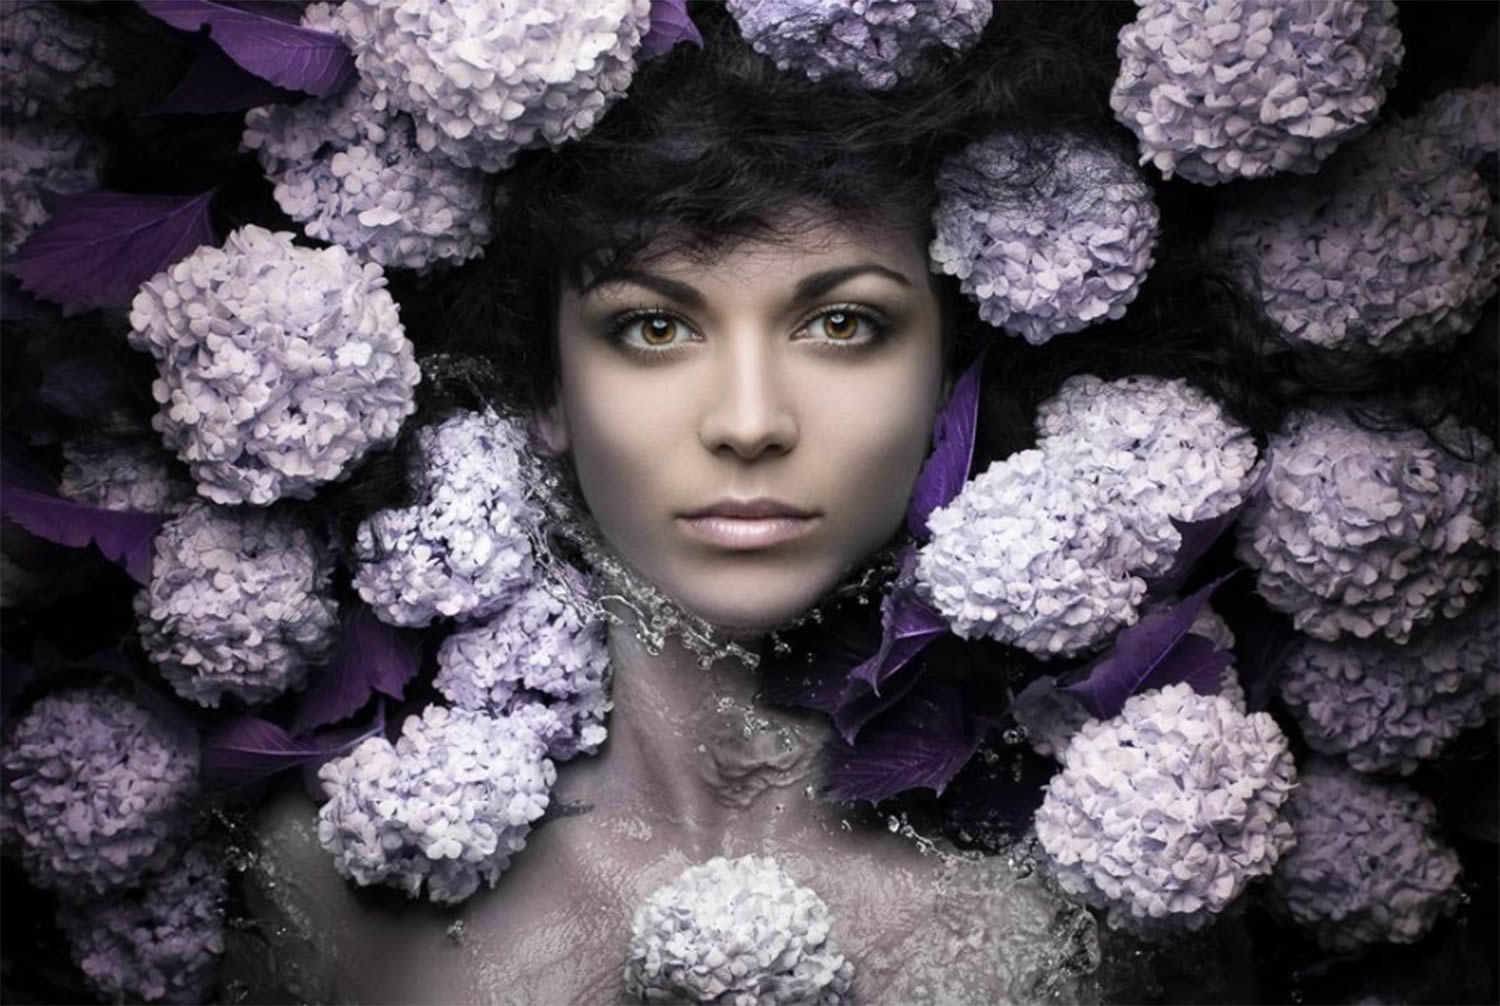 purple flowers around face, portrait by evgeni kolesnik